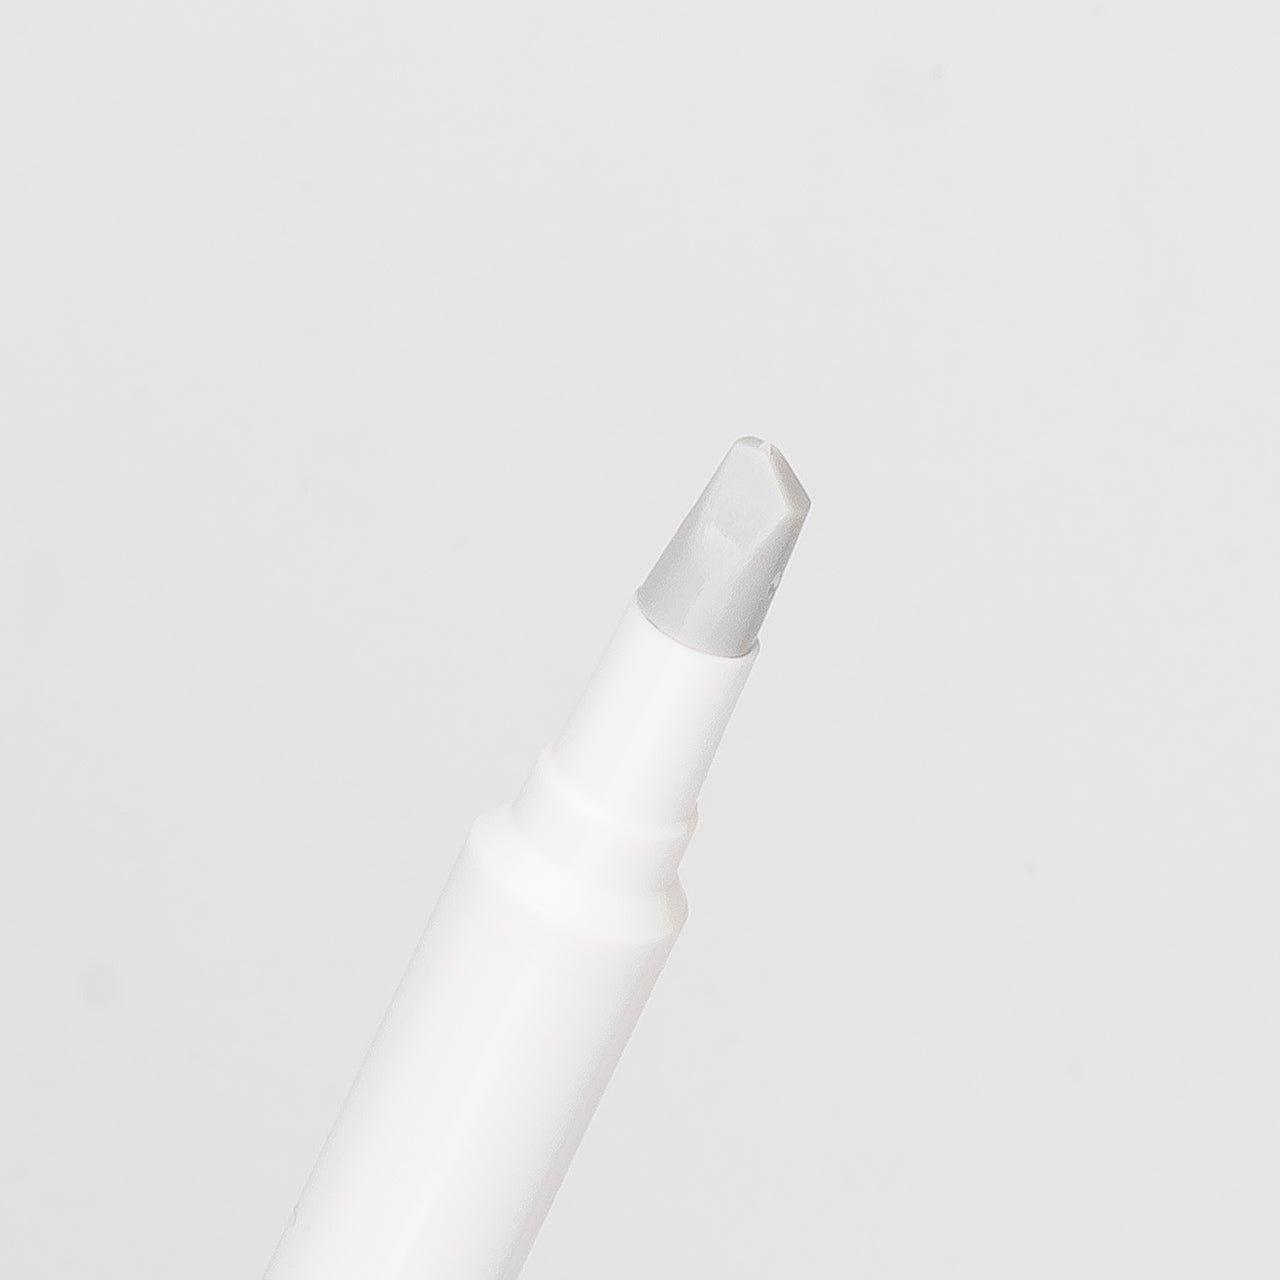 Ceramic Pen Cutter - OHTO